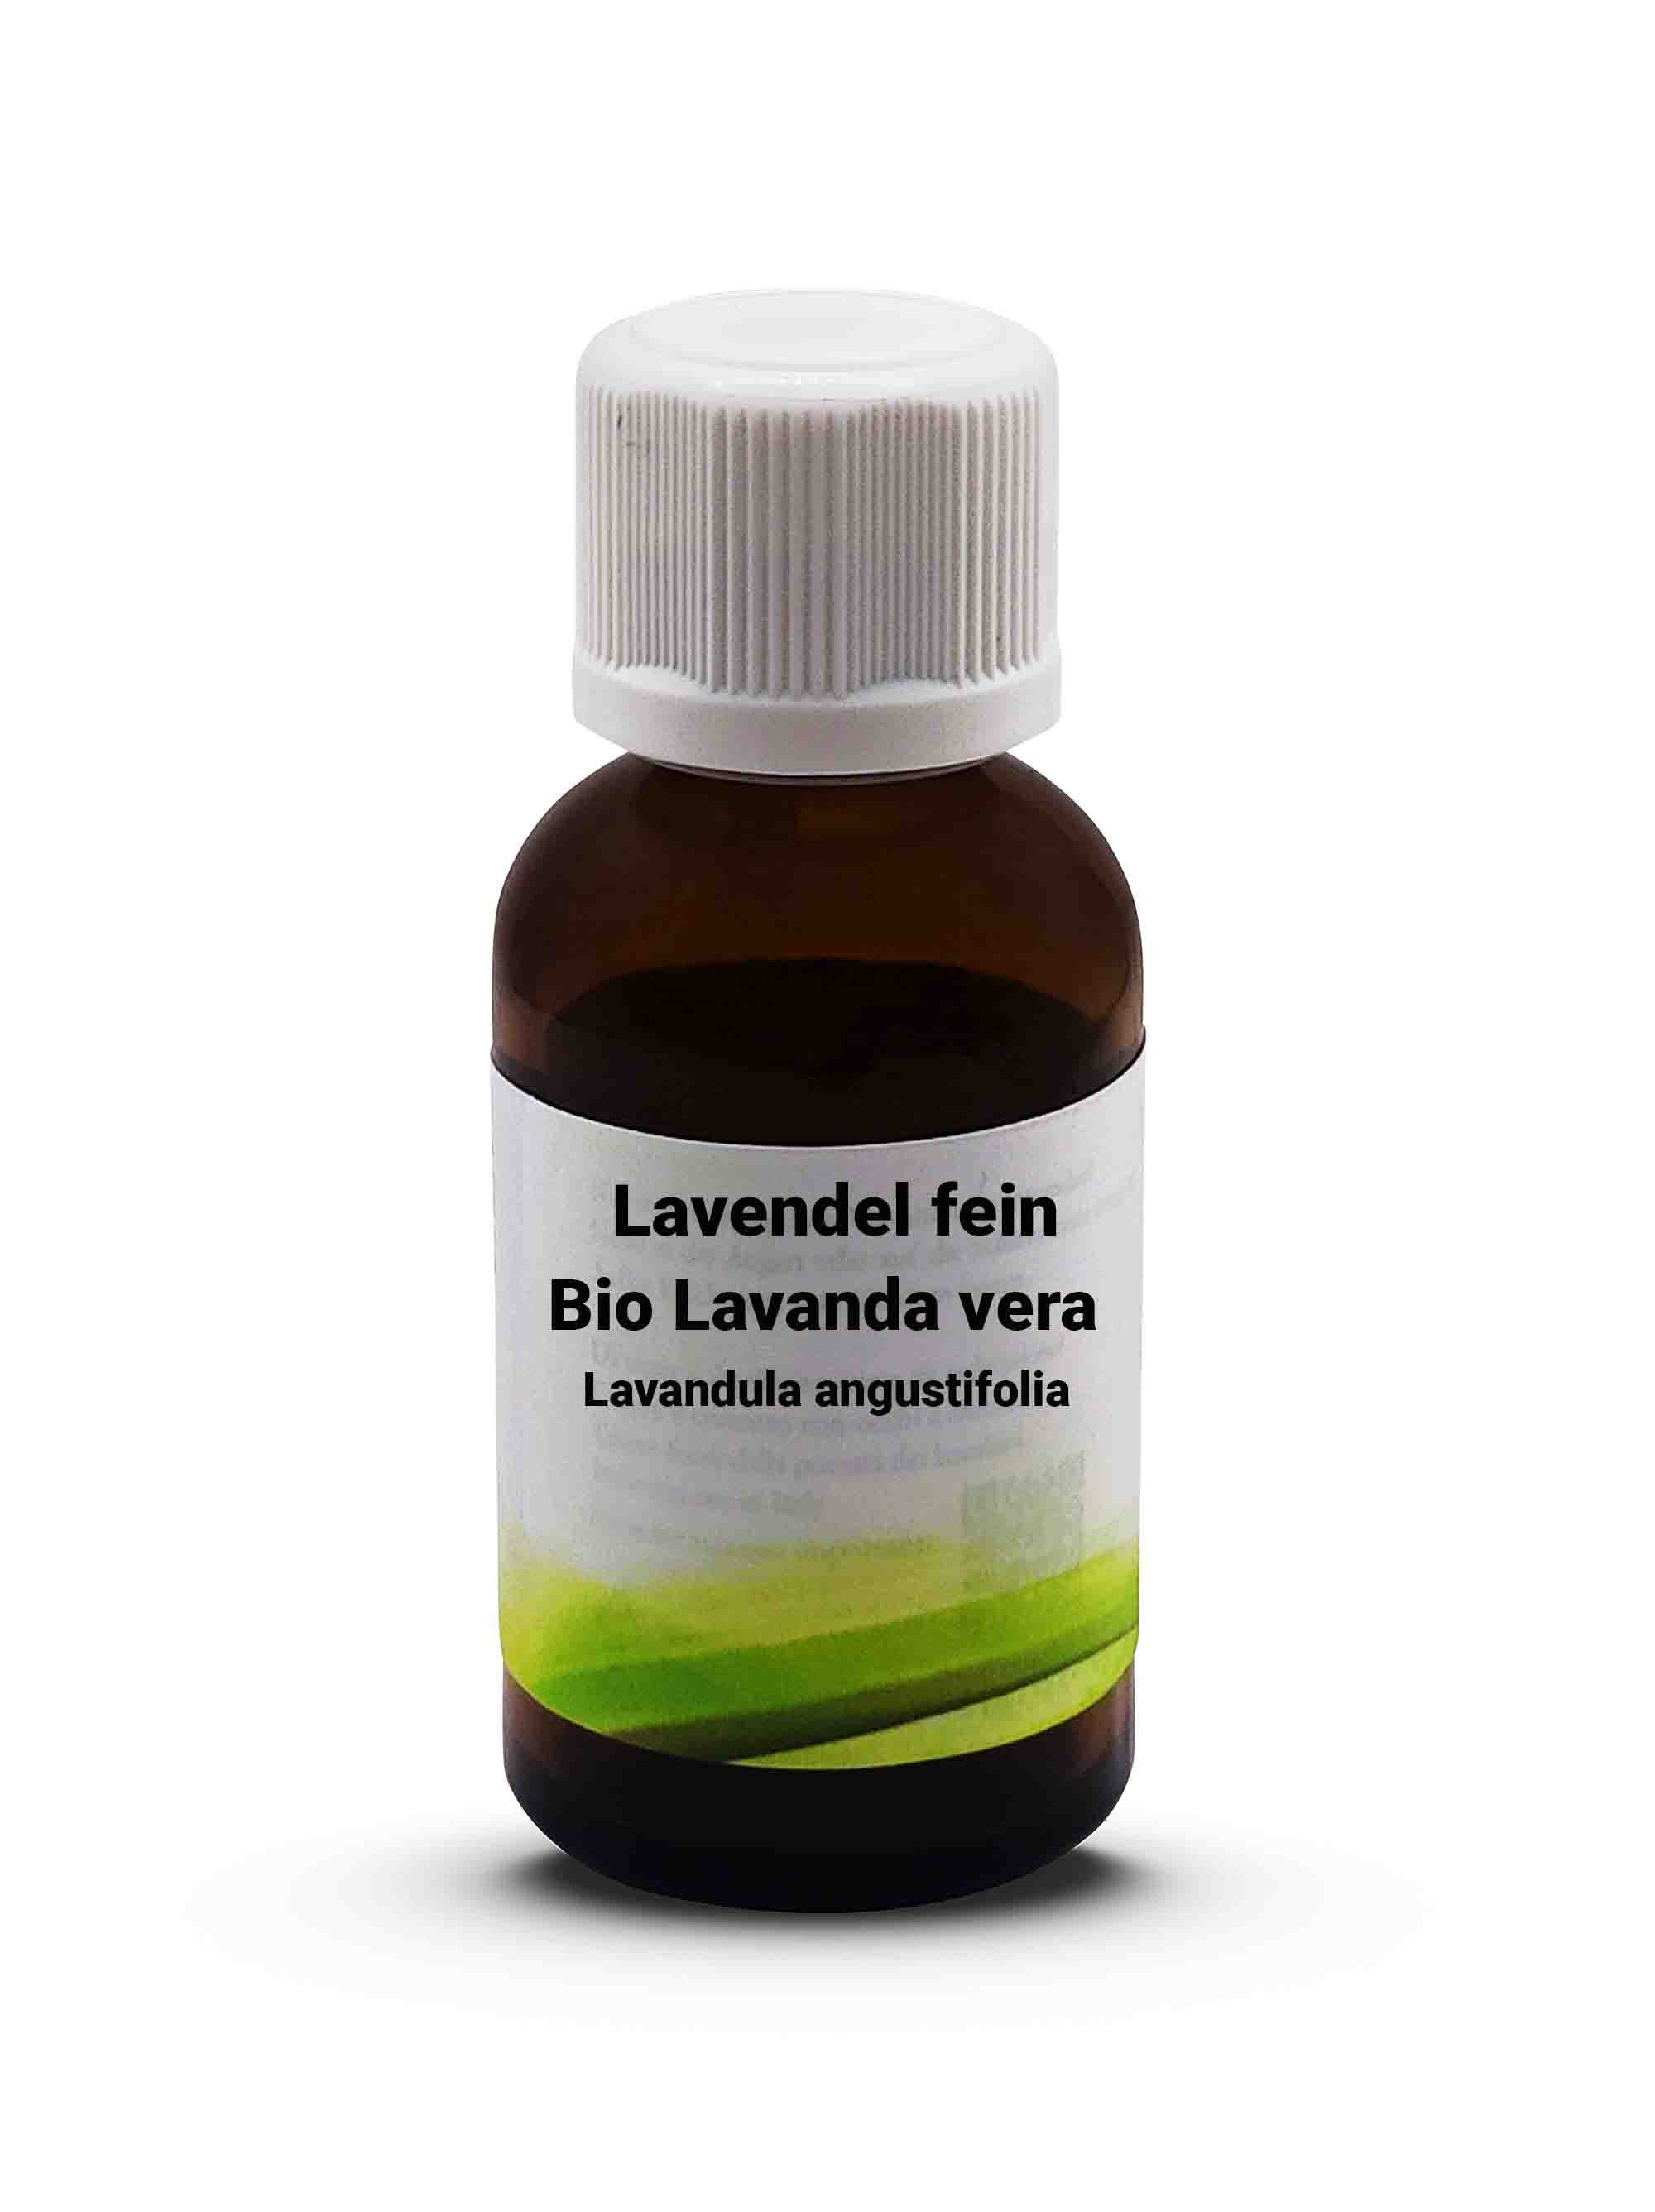 Lavendel fein Bio Lavanda vera Lavandula angustifolia 30ml